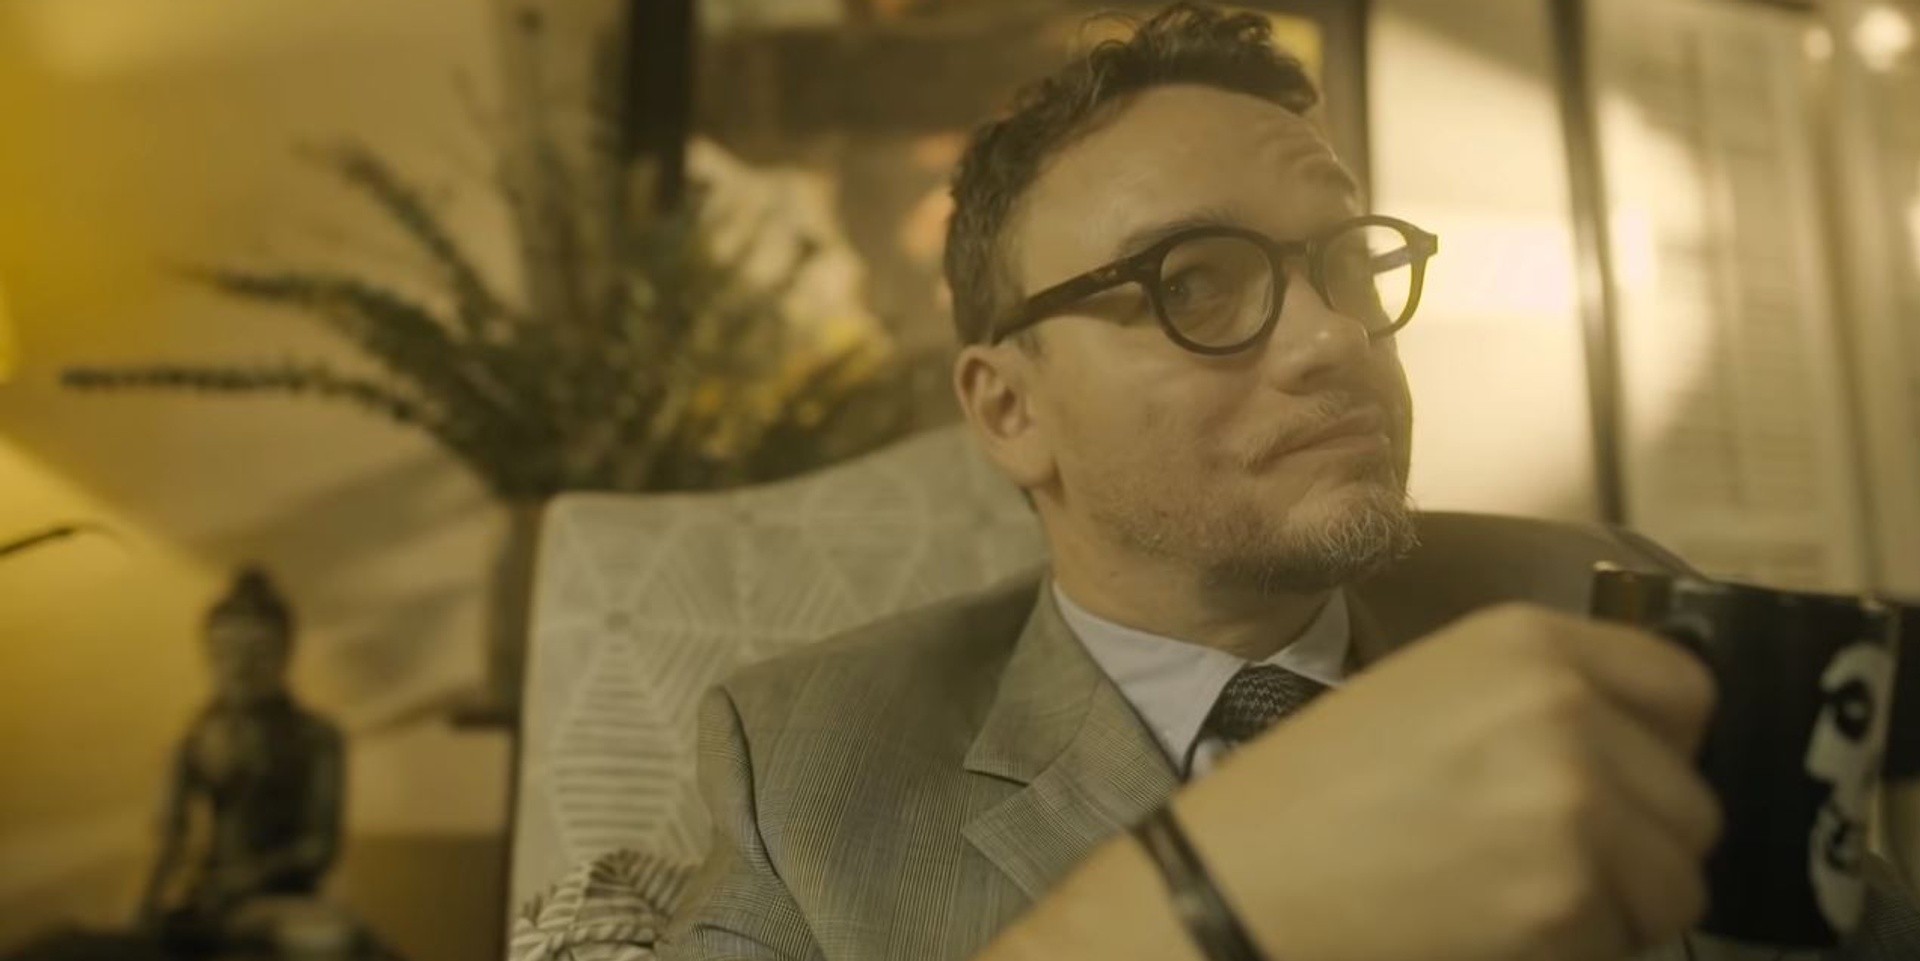 Basti Artadi plays therapist for Jobim Javier in 'Ayoko Lab Song' music video – watch